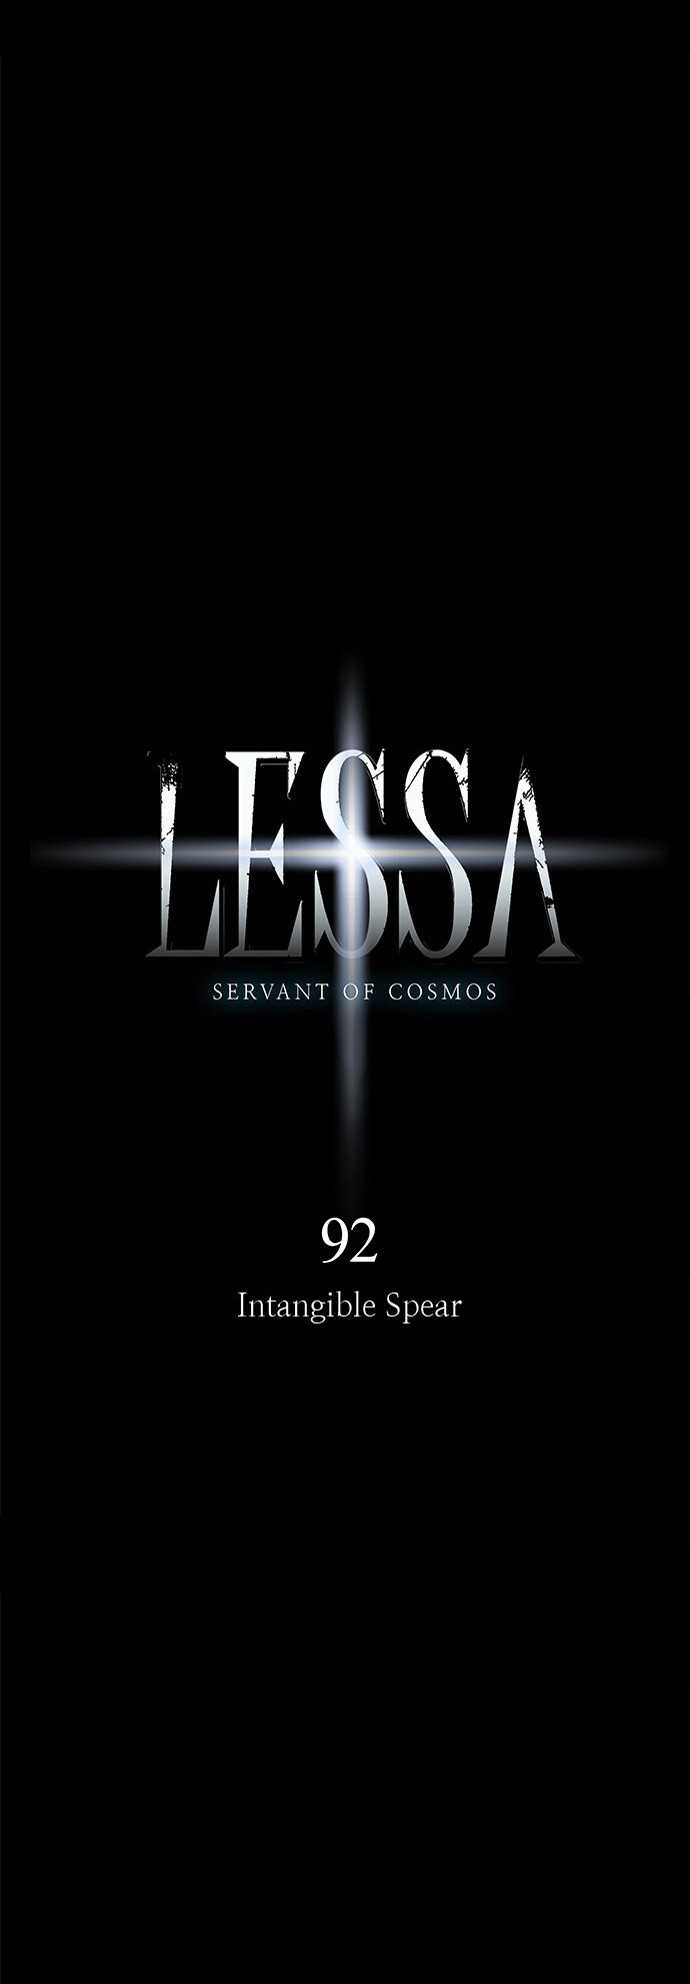 LESSA – Servant of Cosmos Chapter 92